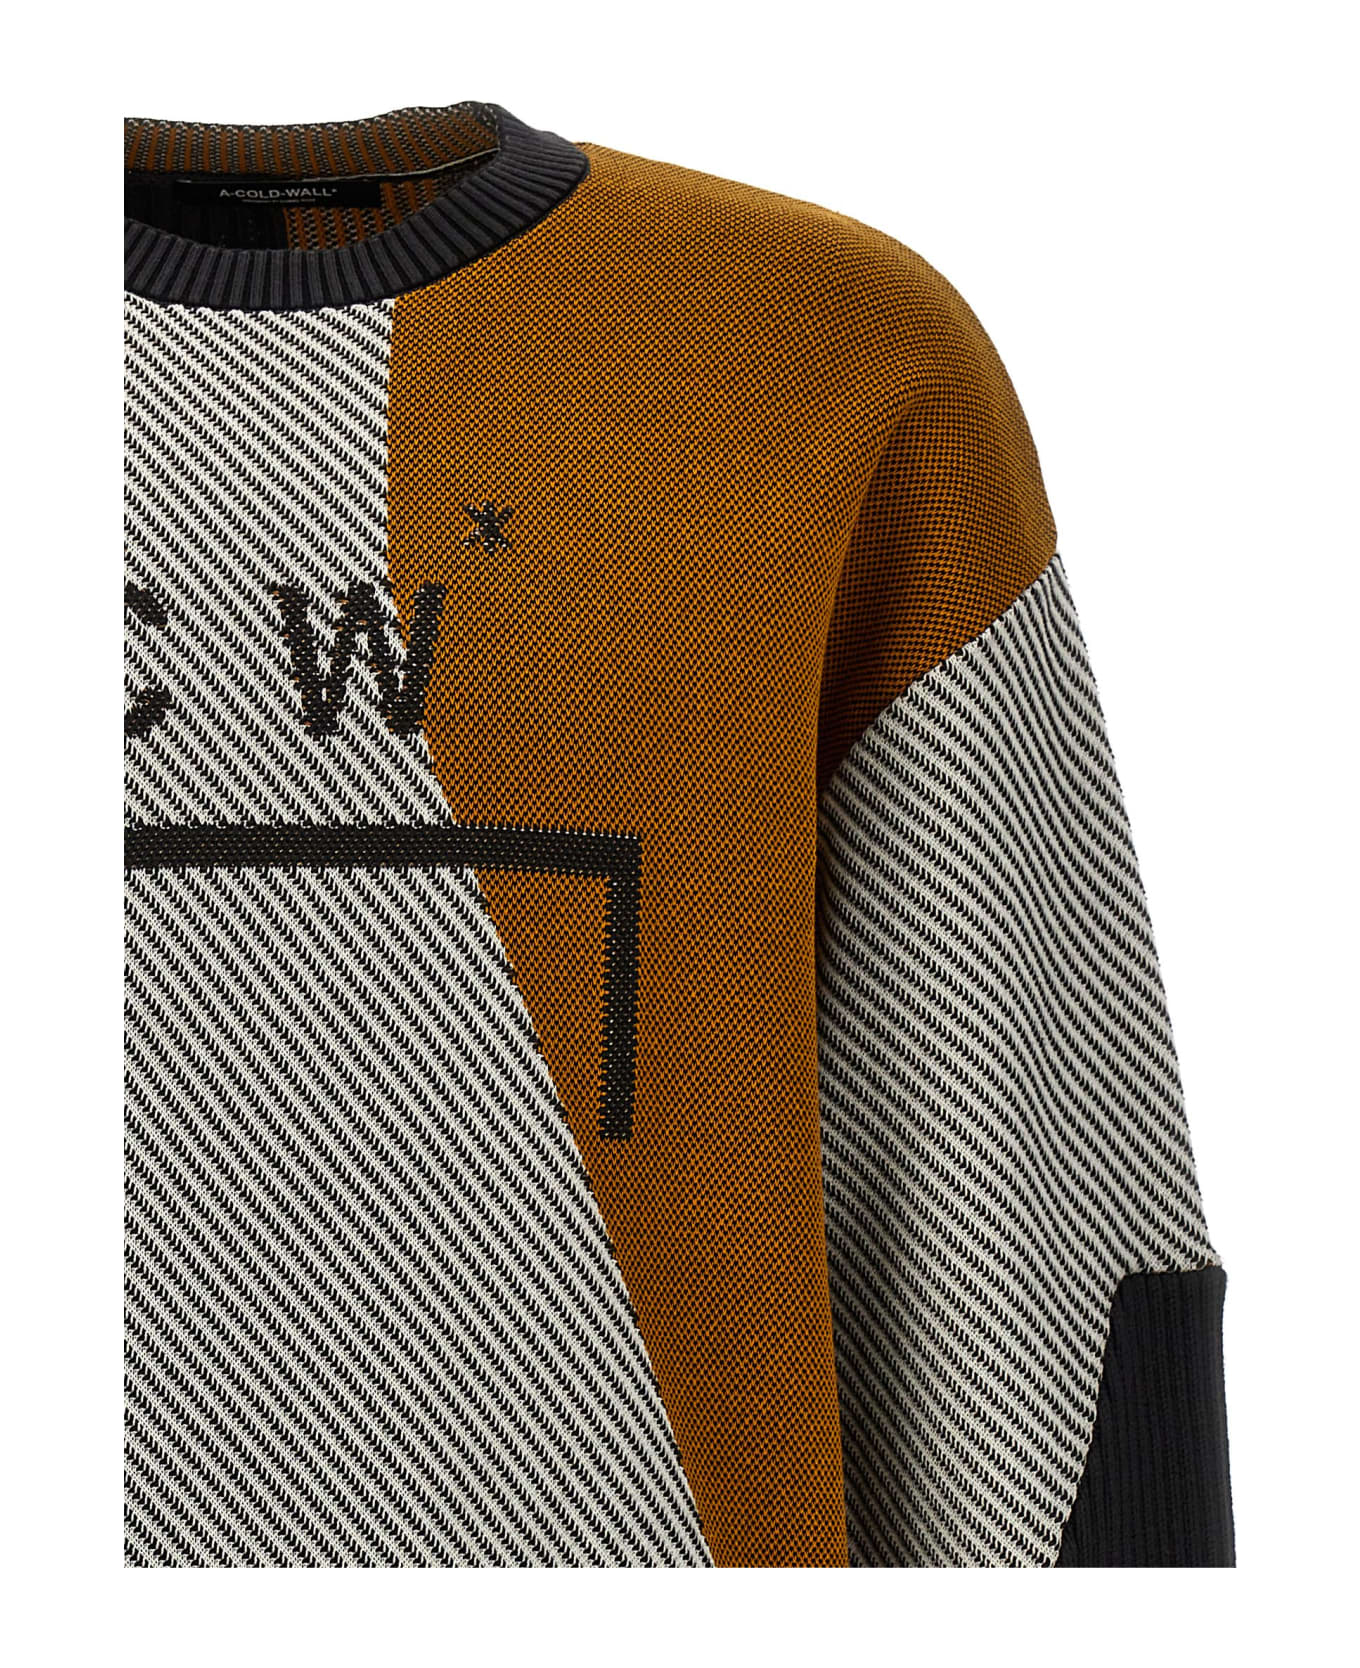 A-COLD-WALL 'geometric' Sweater - Multicolor